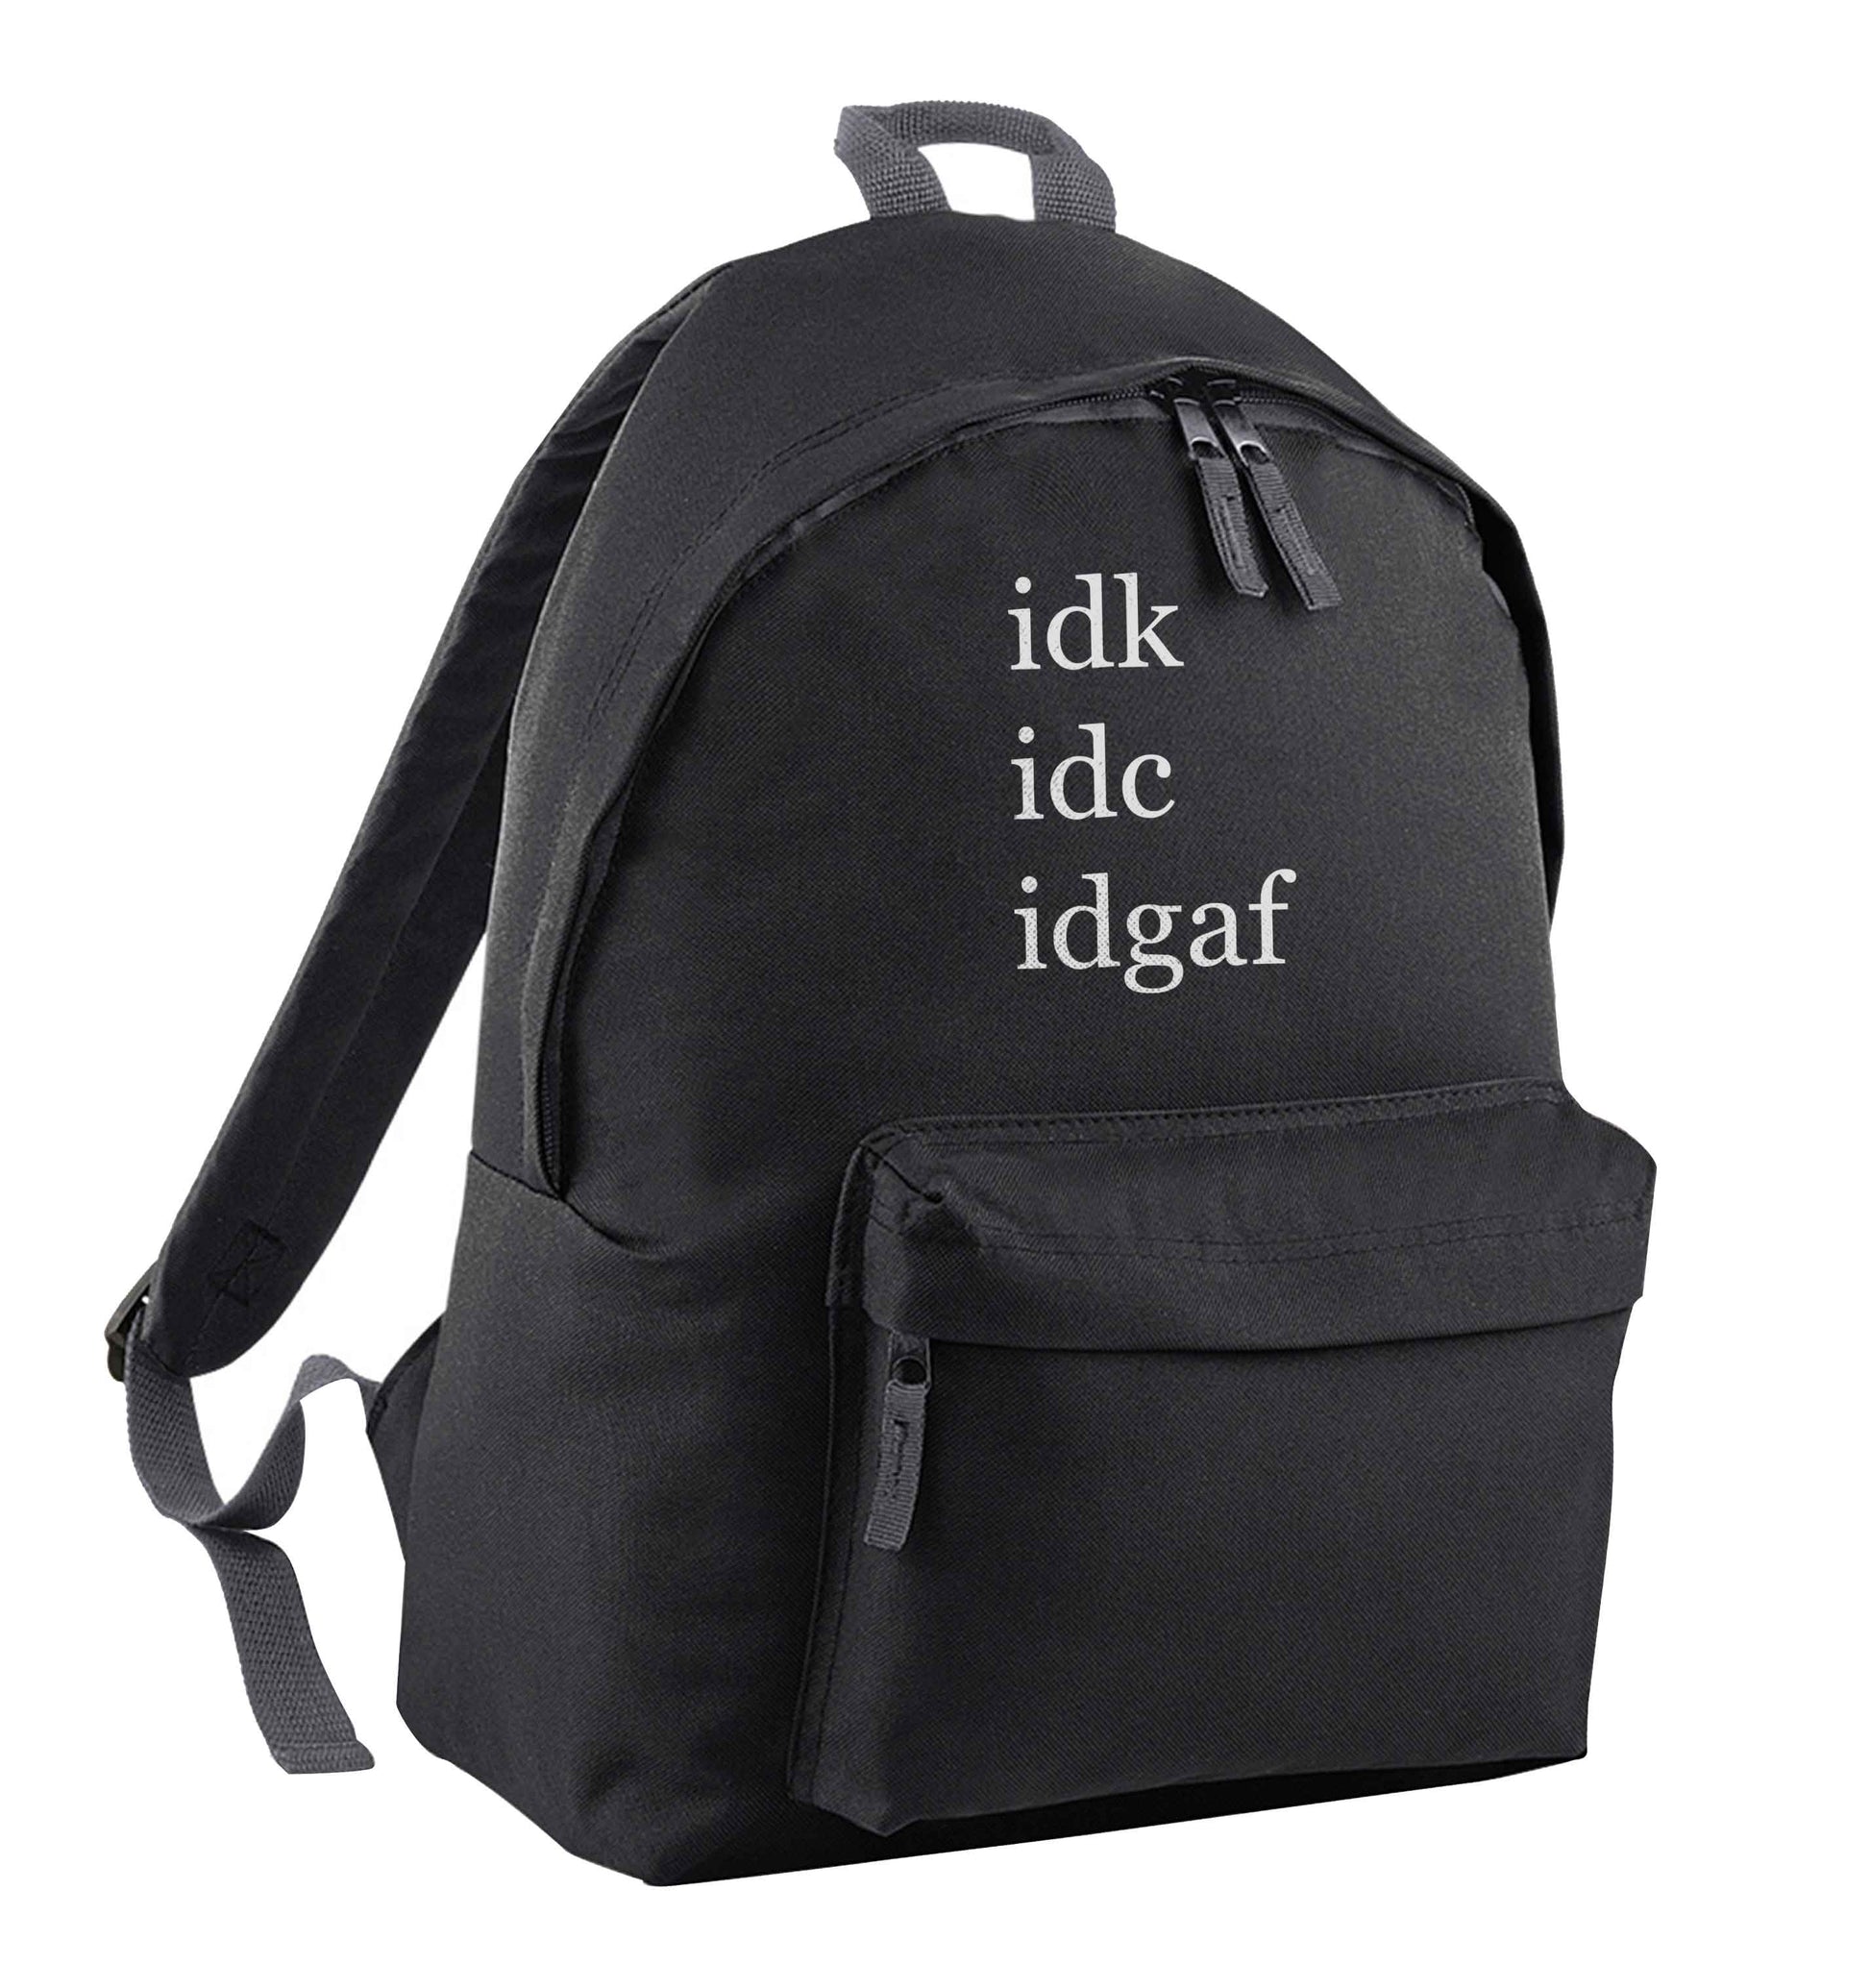 Idk Idc Idgaf black adults backpack